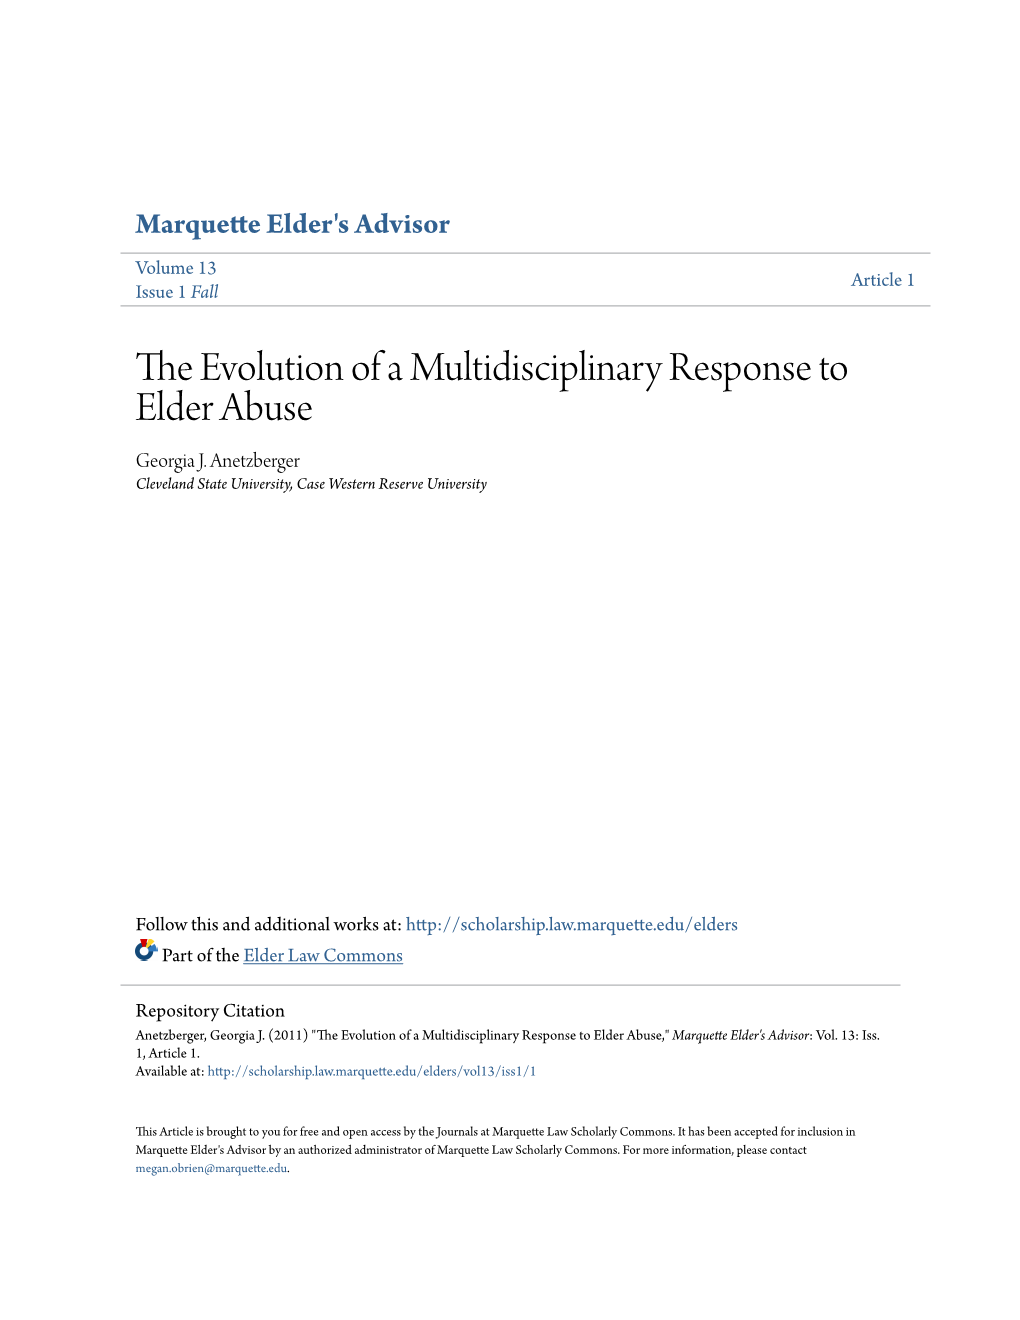 The Evolution of a Multidisciplinary Response to Elder Abuse